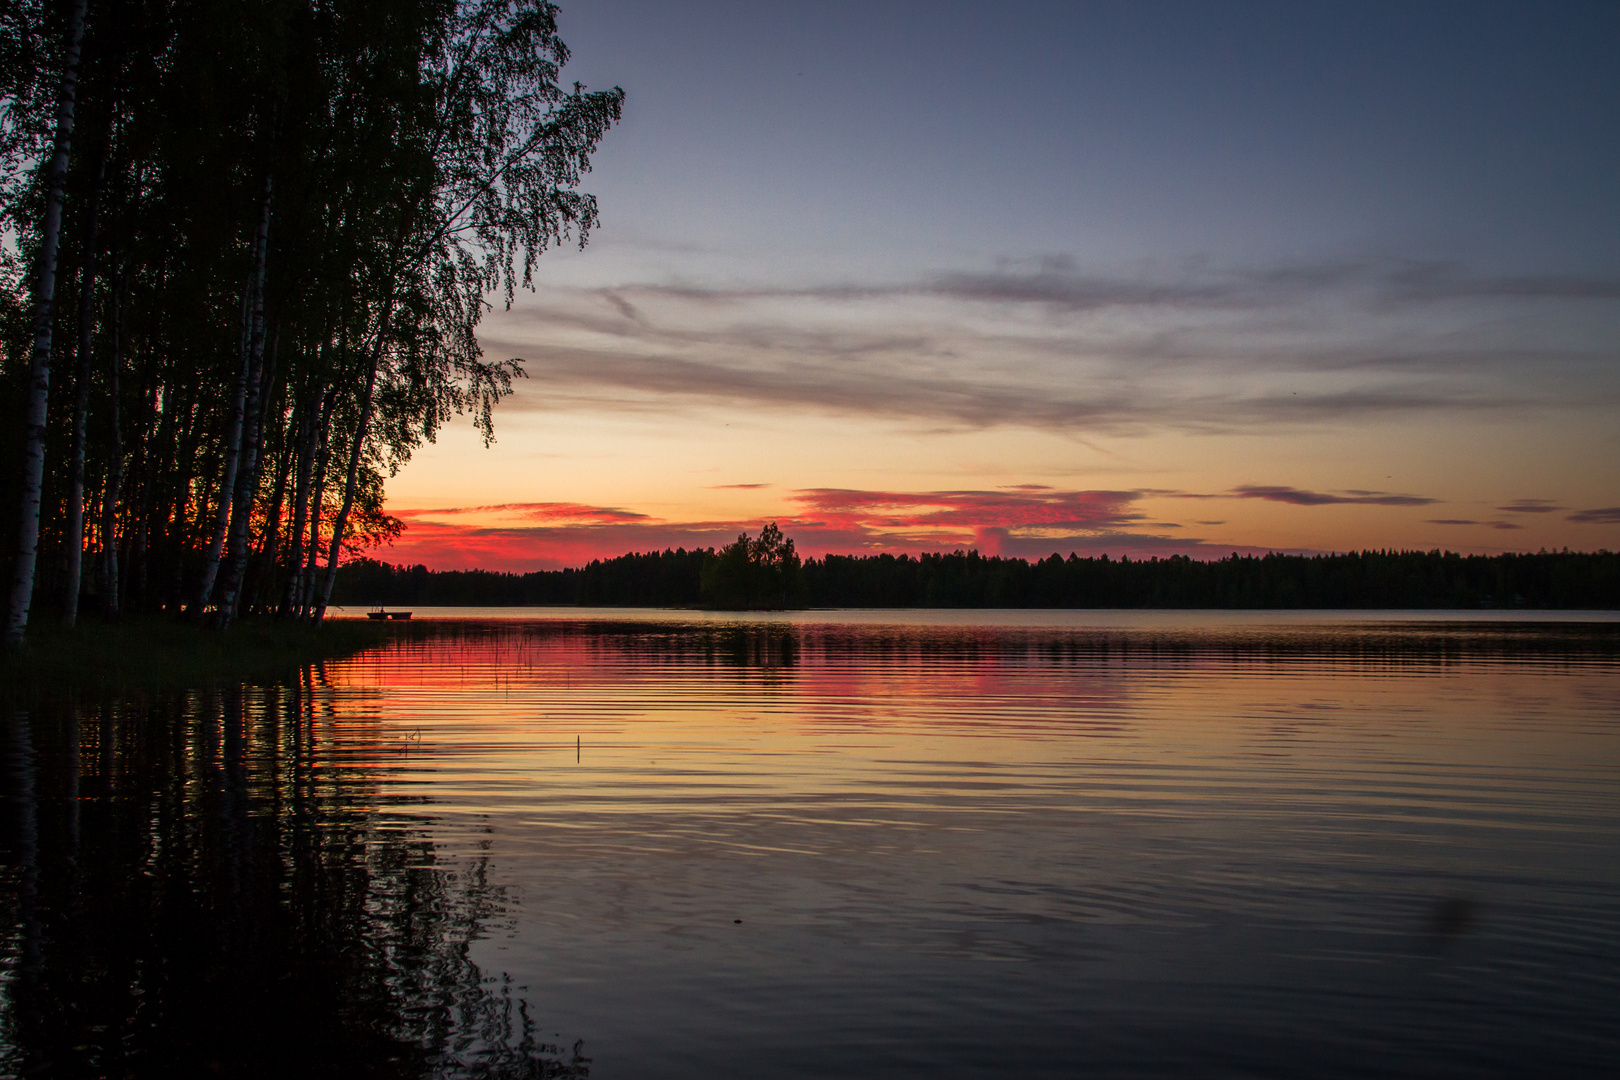 Vanjärvi, Suomi